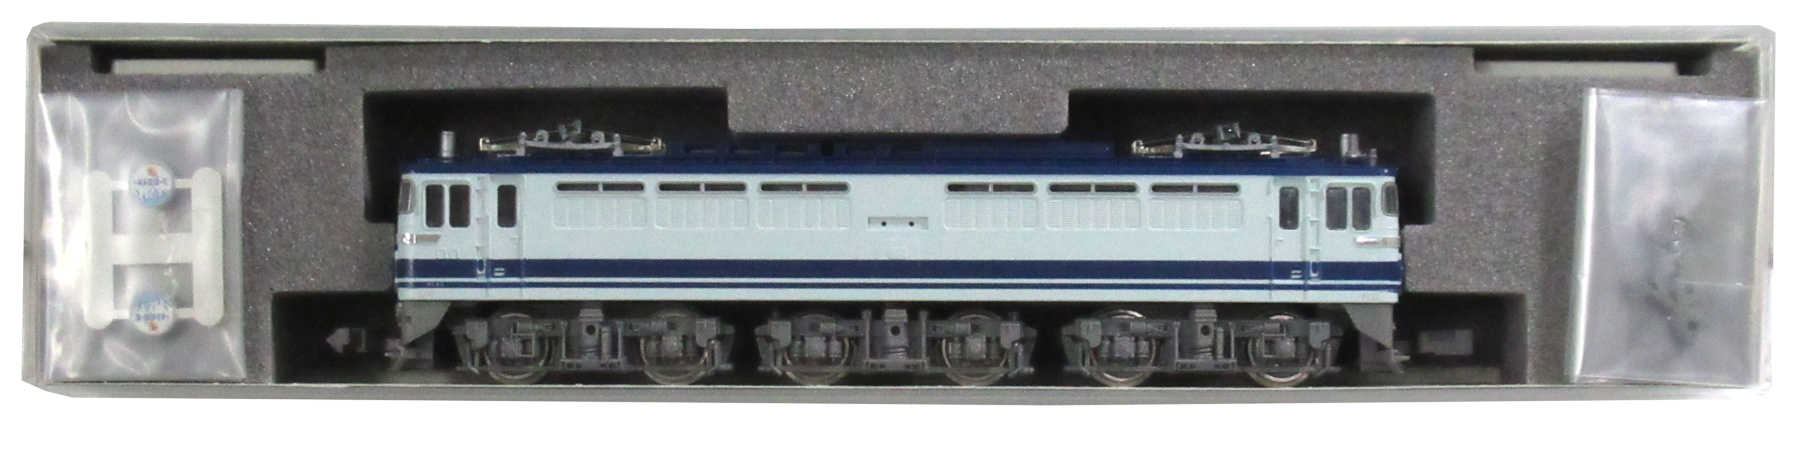 【SEAL限定商品】 KATO EF65ユーロライナー色 3017-4 鉄道模型